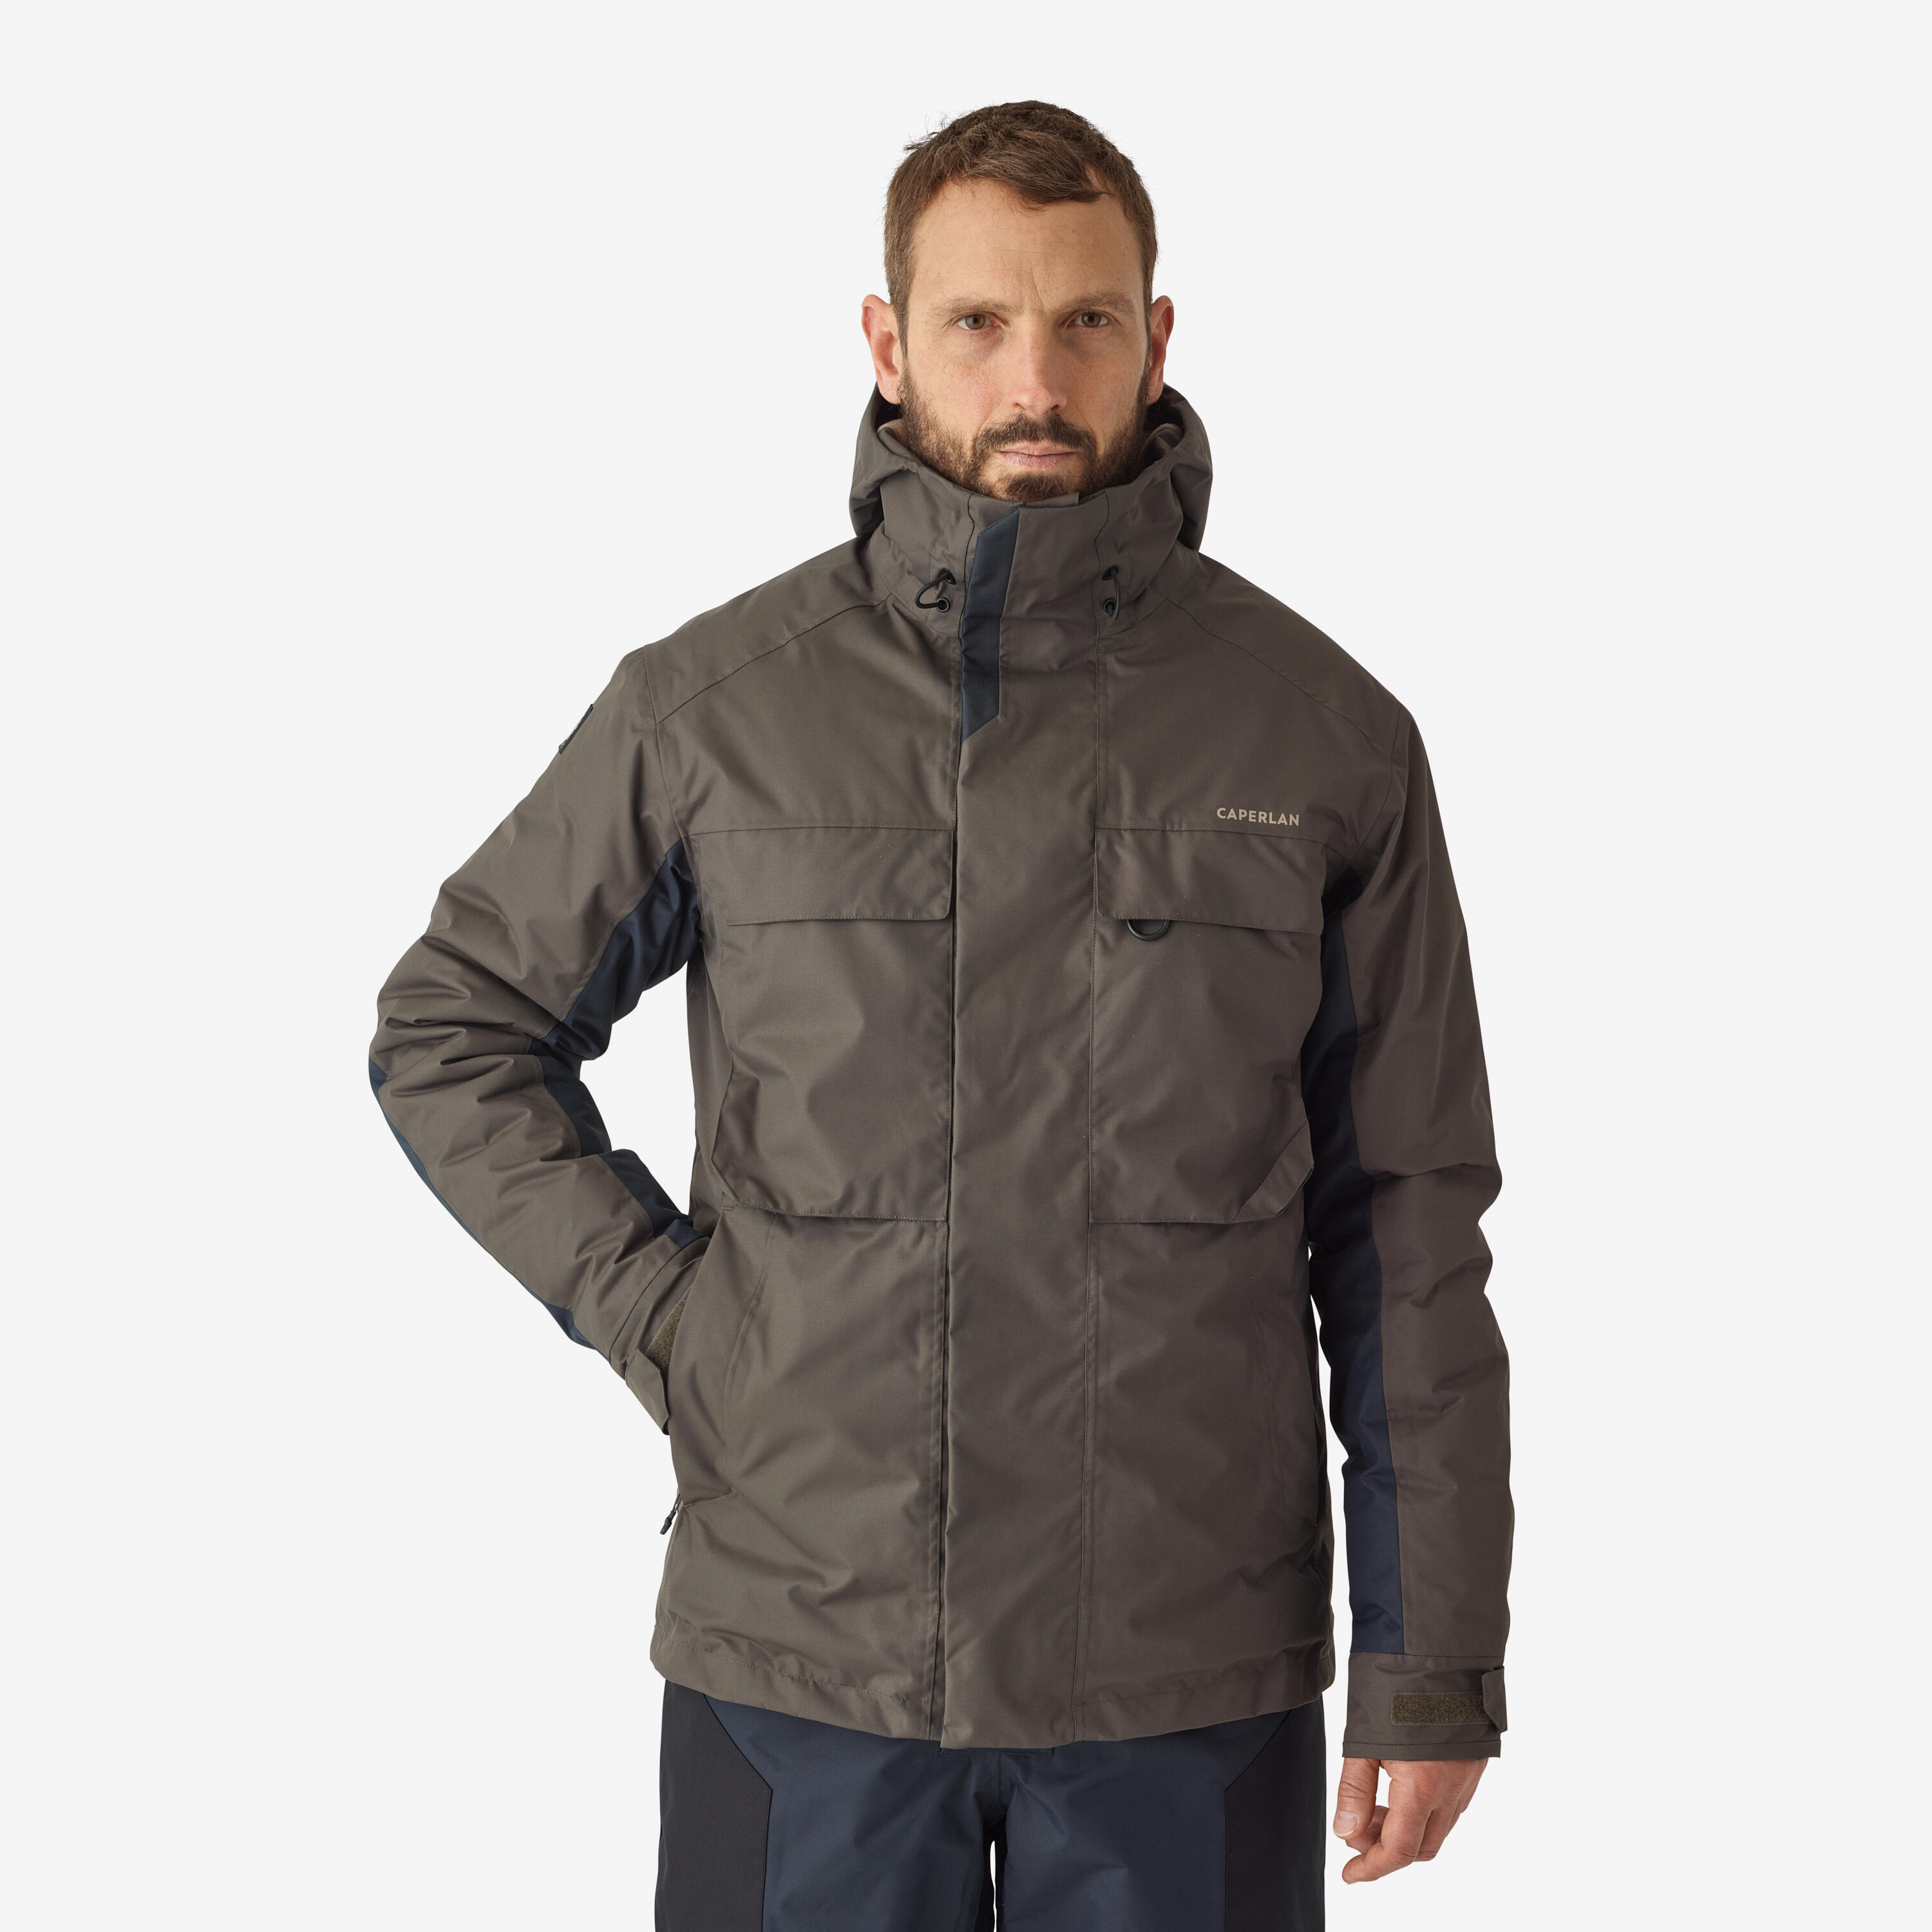 Men's warm waterproof fishing jacket - FJ 500 TH khaki CAPERLAN